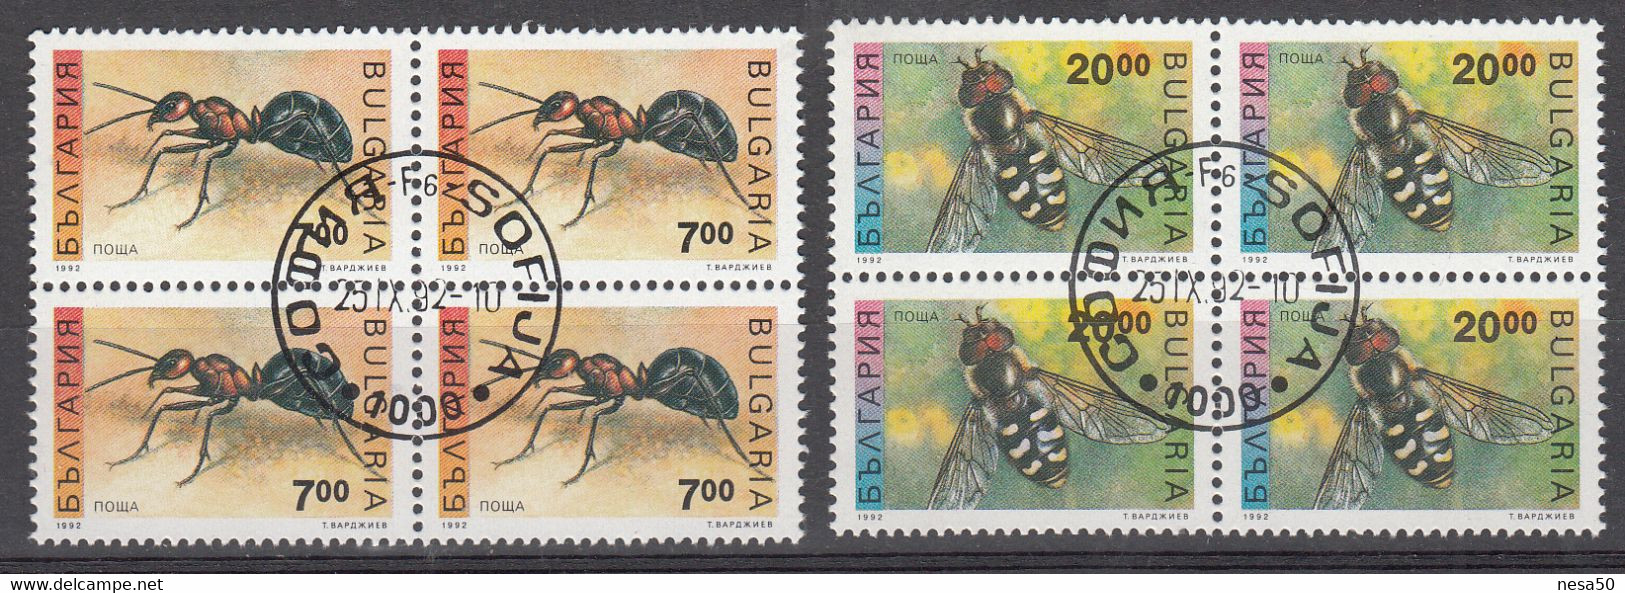 Bulgarije 1992 Mi Nr 3998 + 3999, Blok Van 4, Bosmier + Zweefvlieg. Forest Ant + Hoverfly, Insecten - Usados